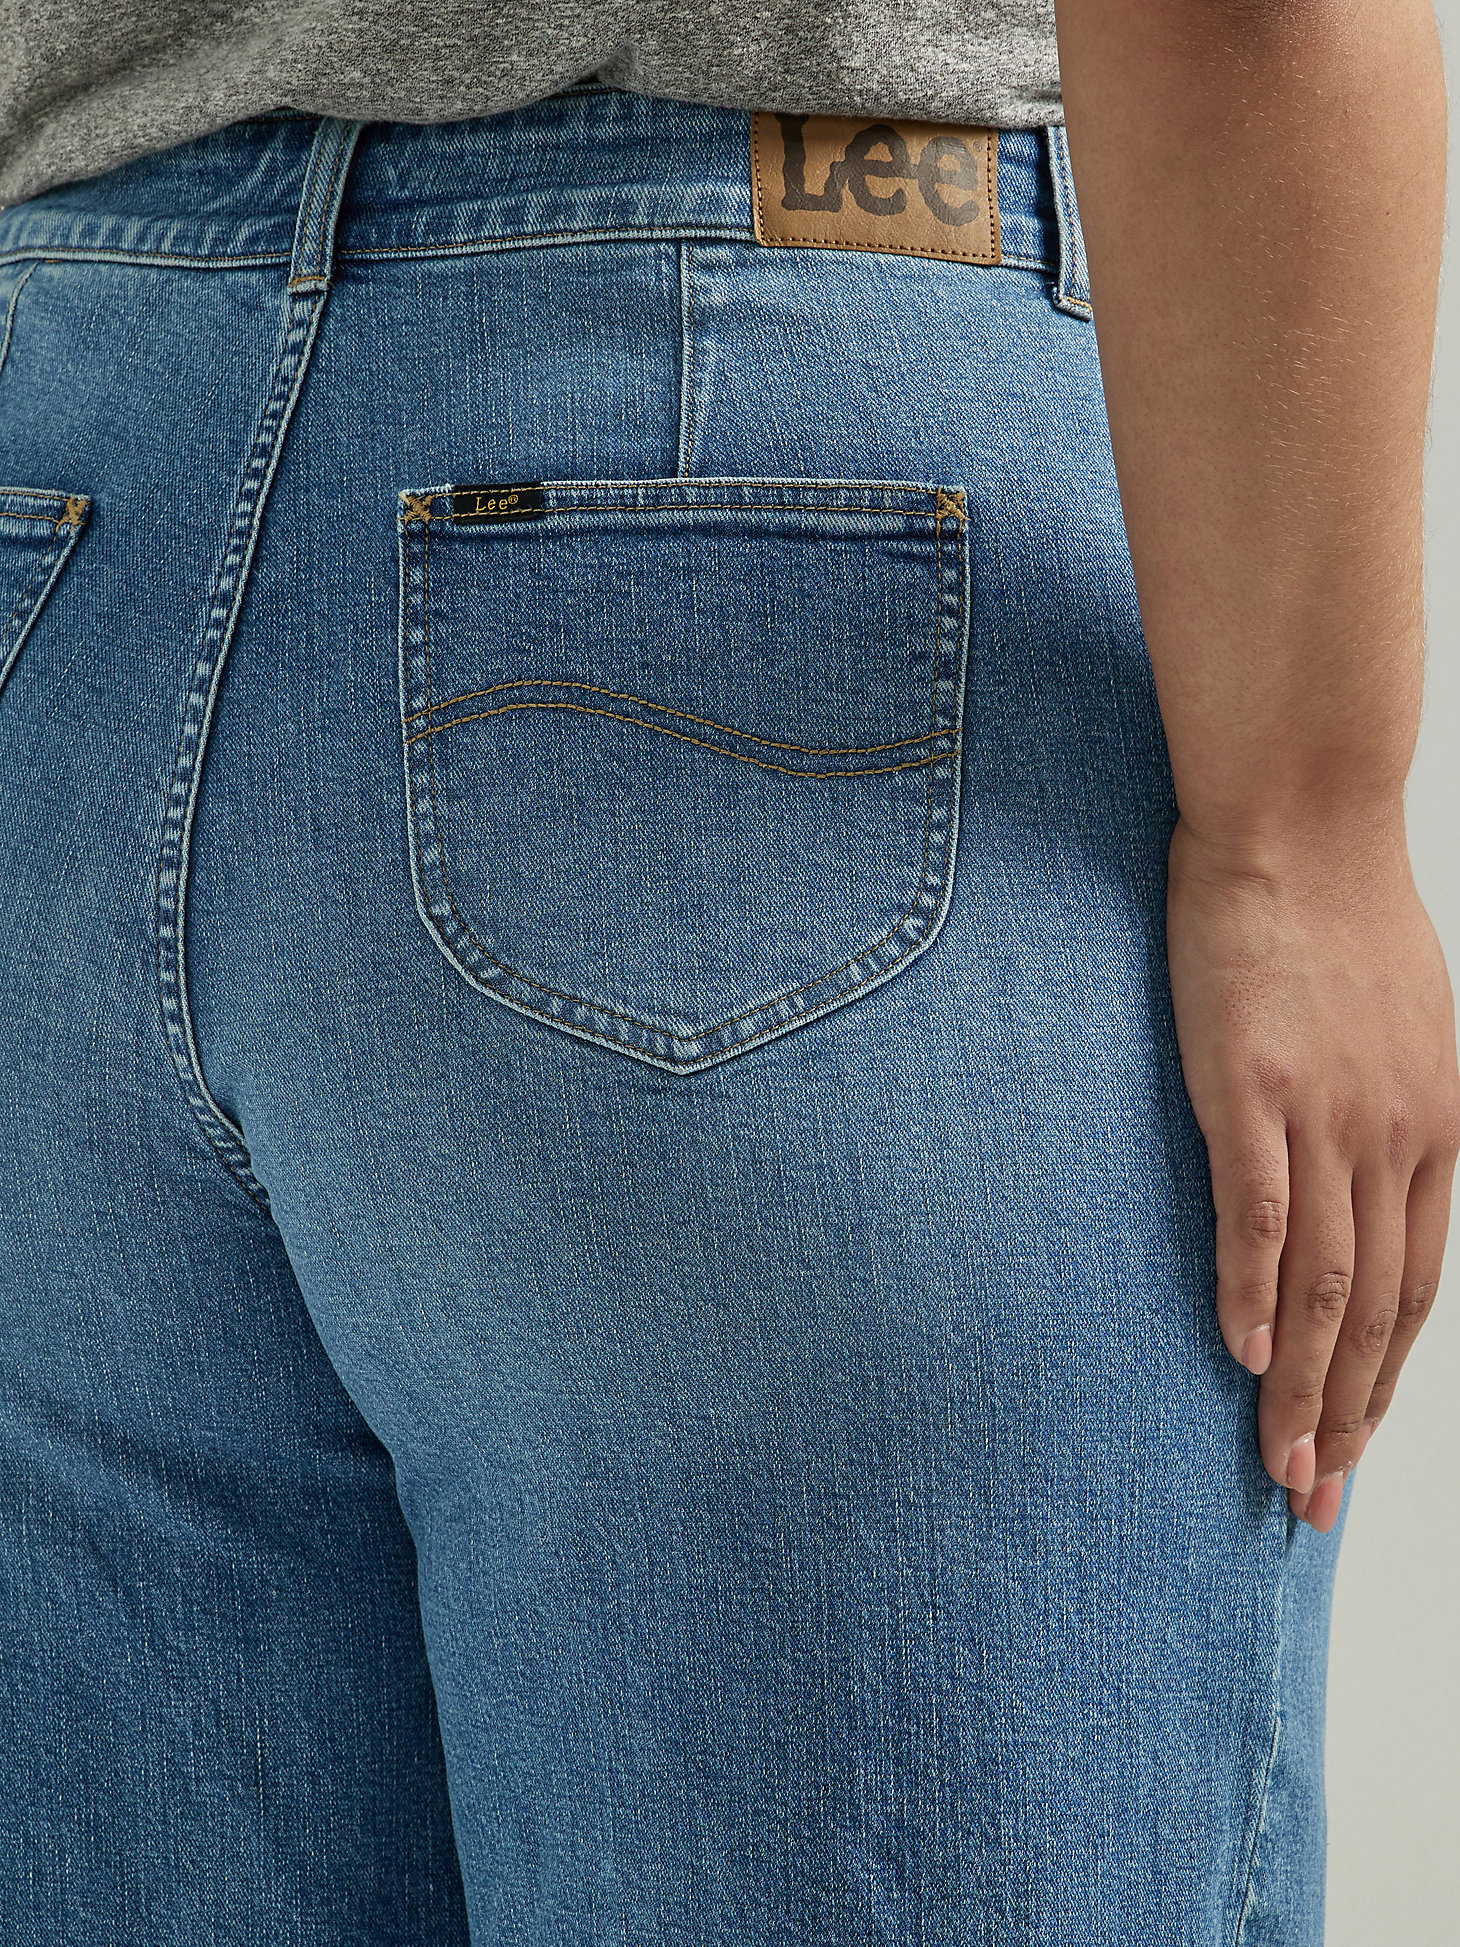 Women's Legendary Trouser Jean (Plus) in Elevated Retro Blue alternative view 5